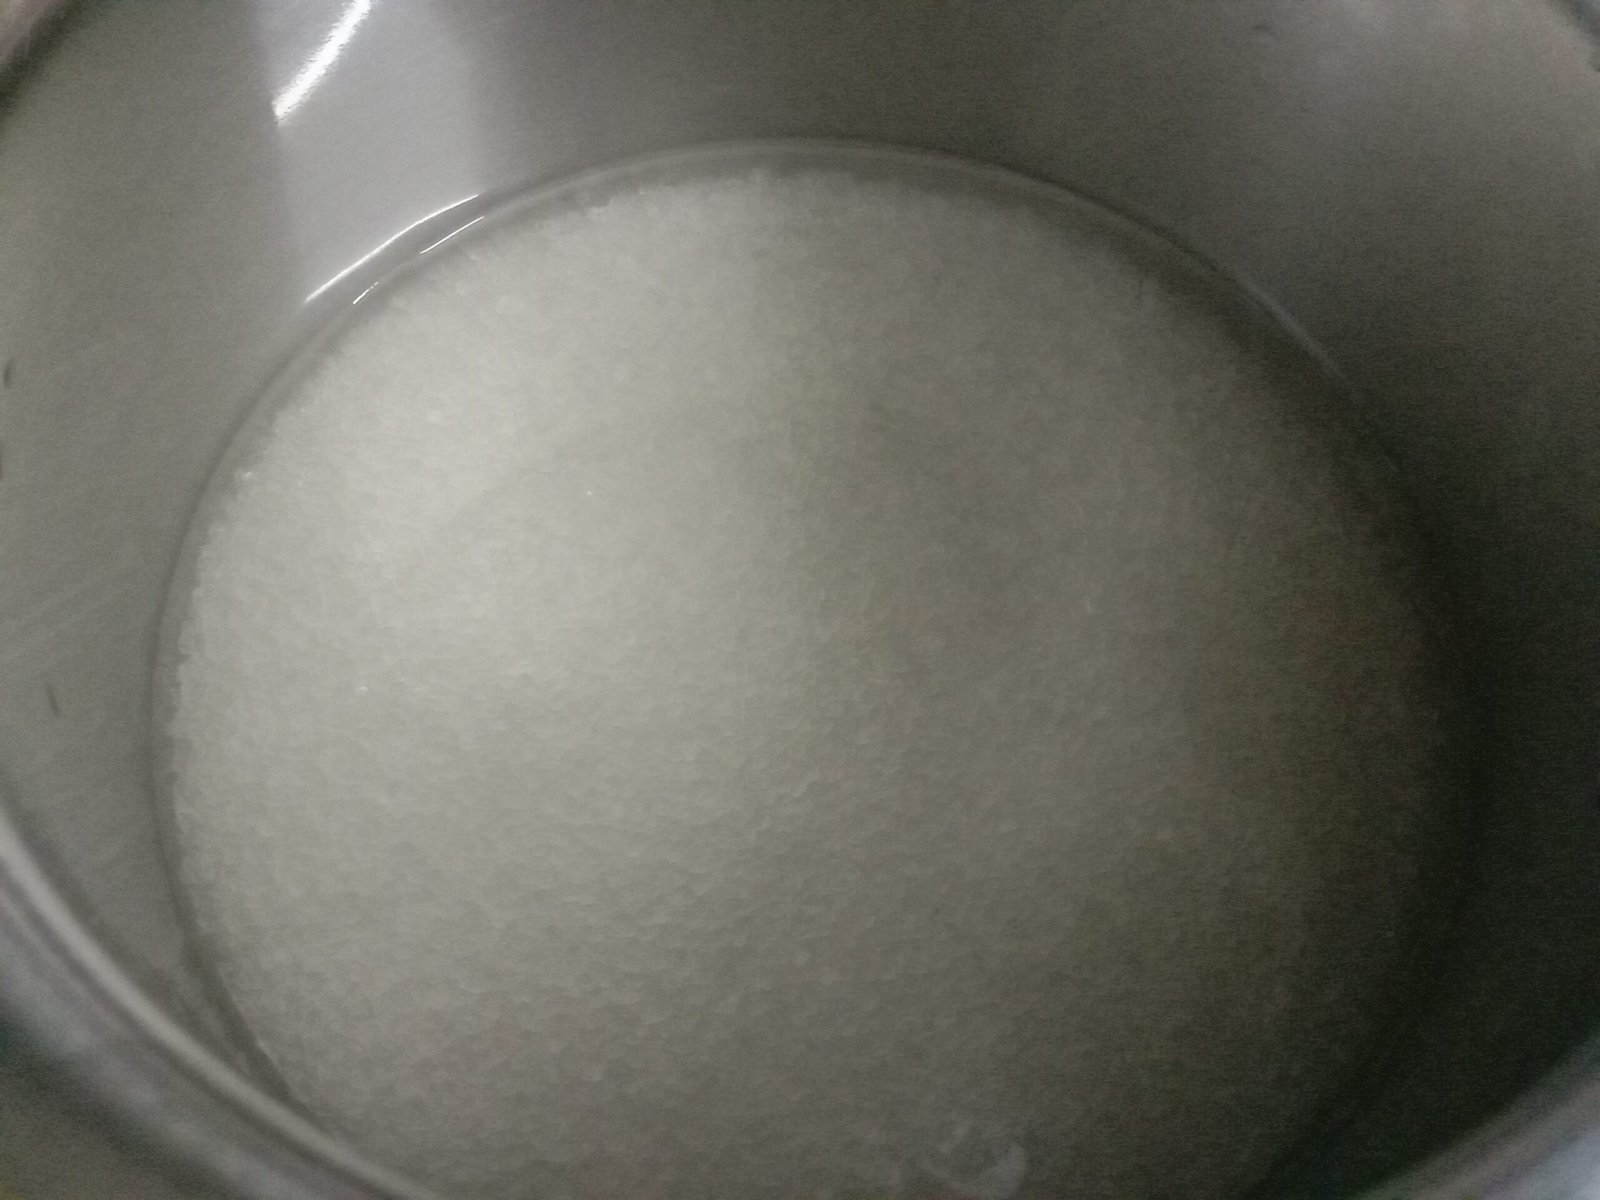 Adding water and sugar in pot for sugar syrup, gulab jamun recipe.